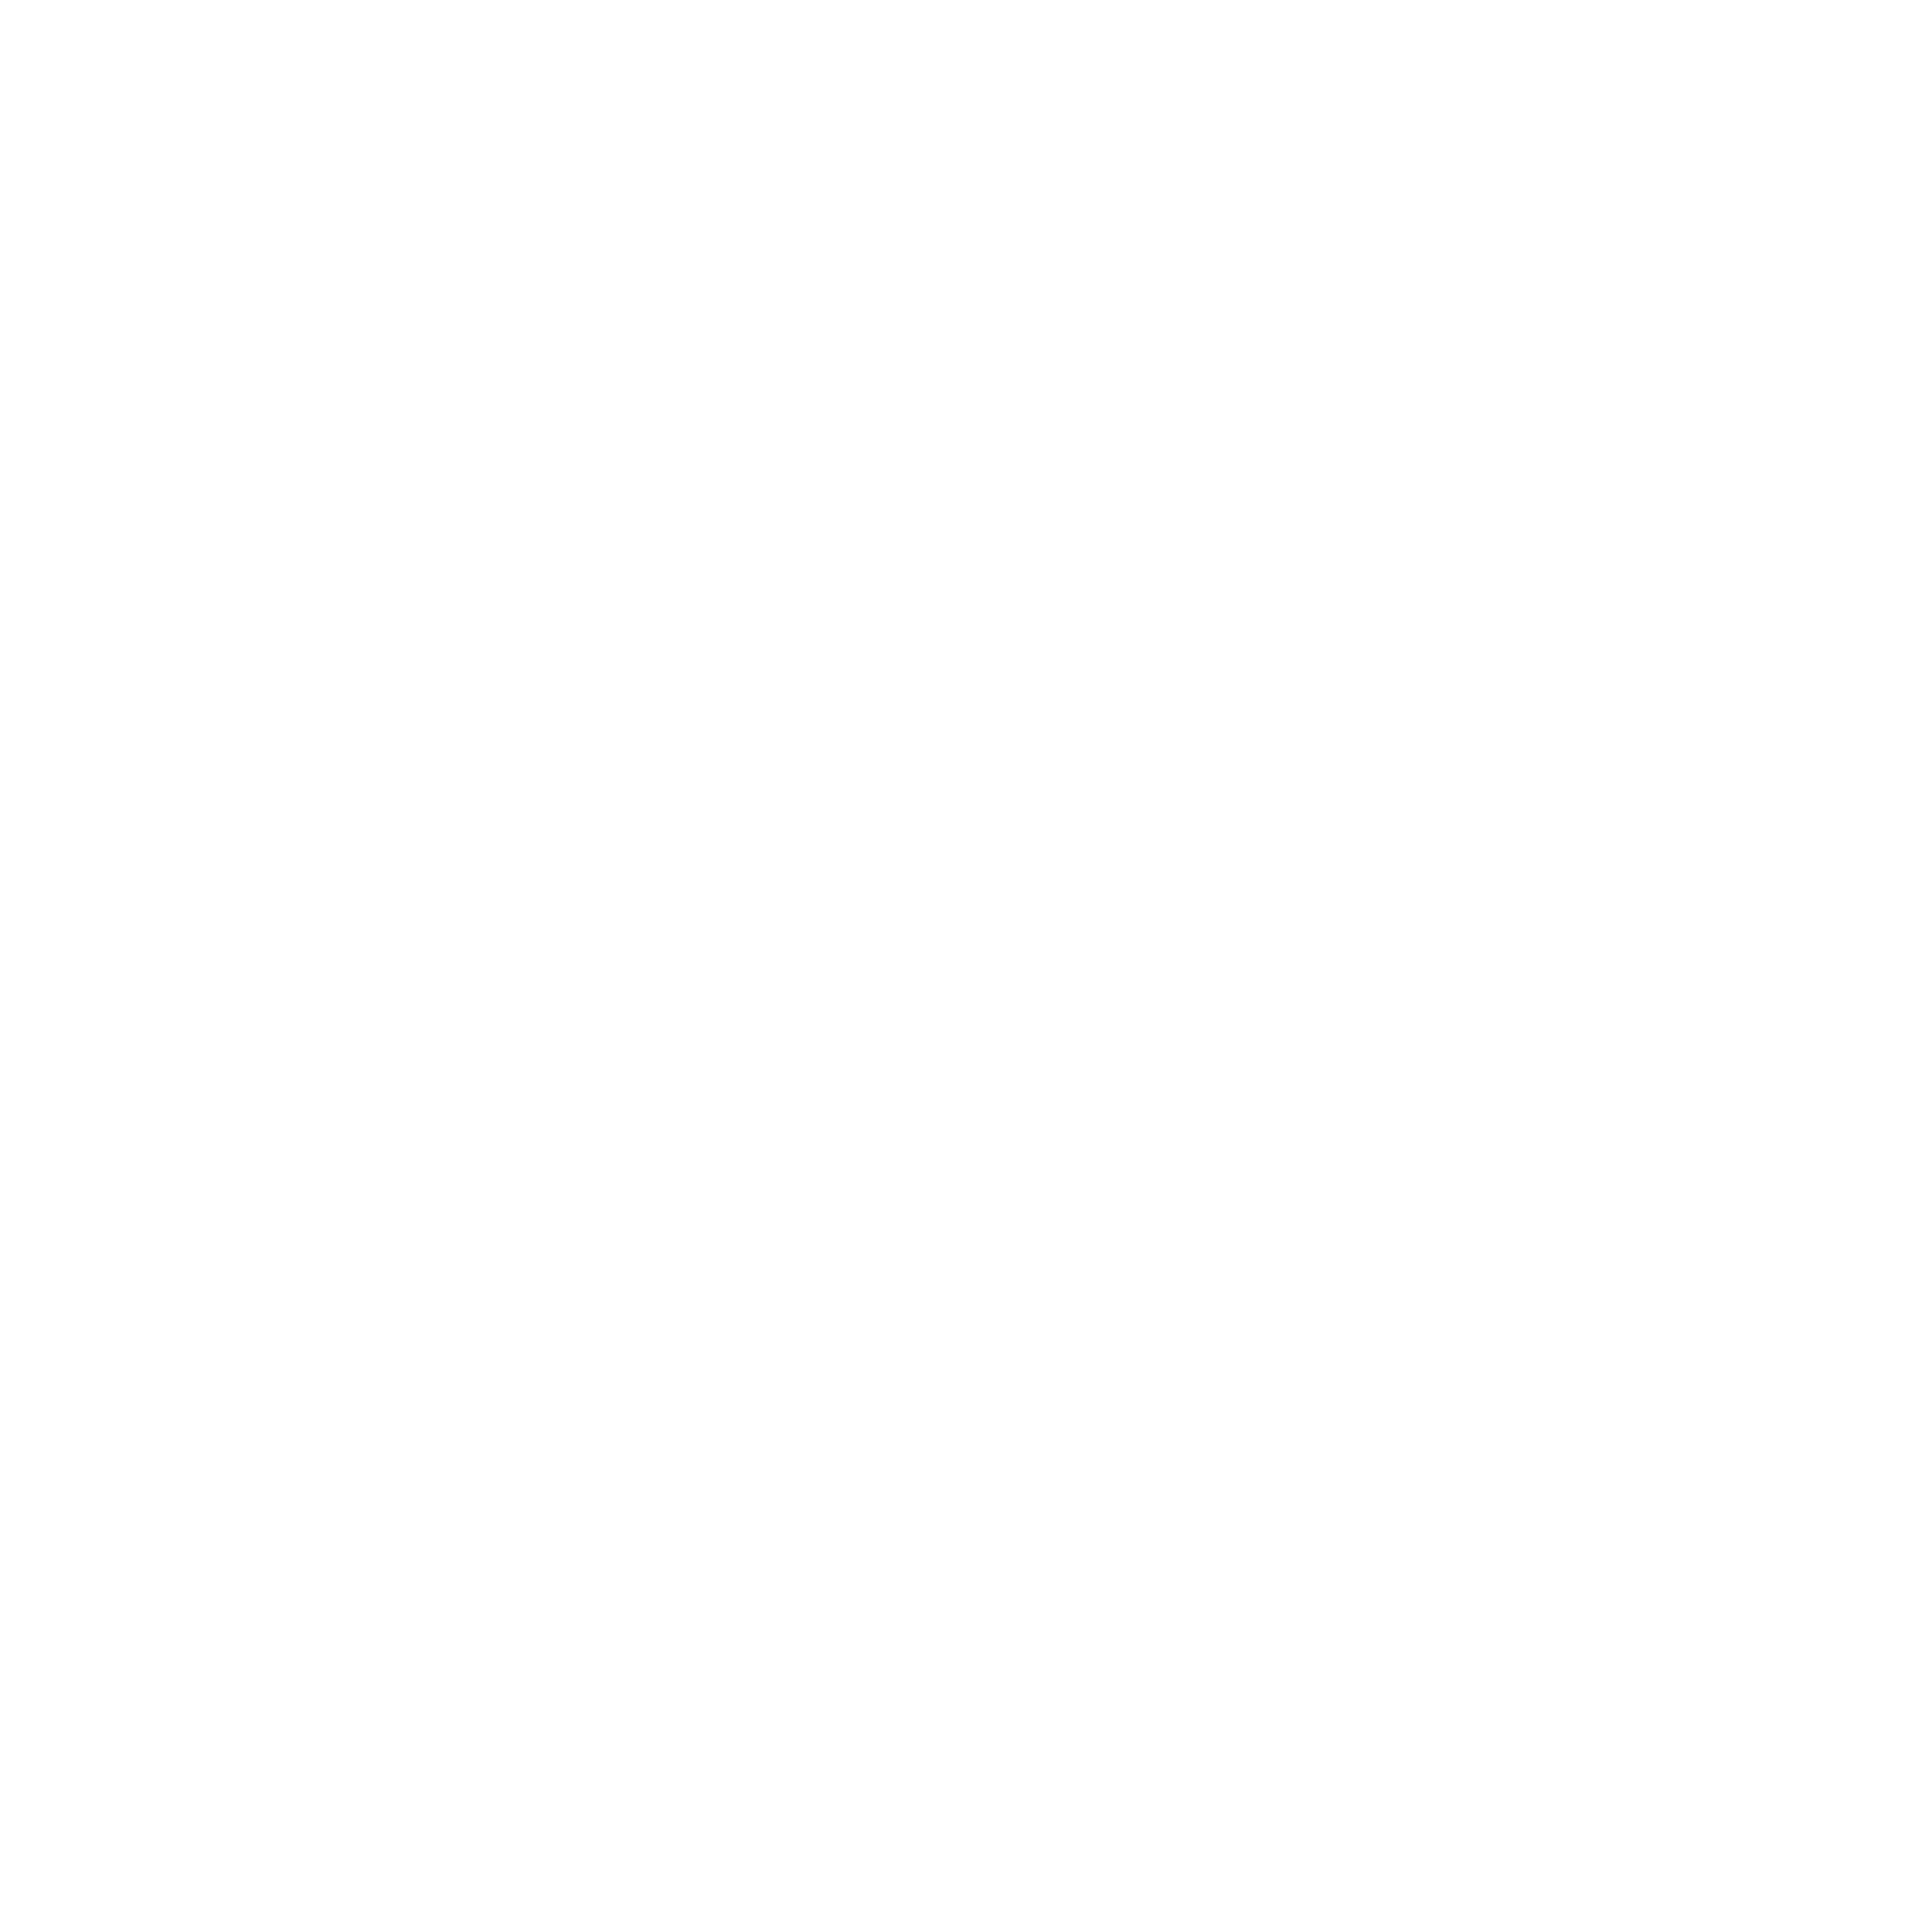 Quip Logo - Dril Quip Logo PNG Transparent & SVG Vector - Freebie Supply